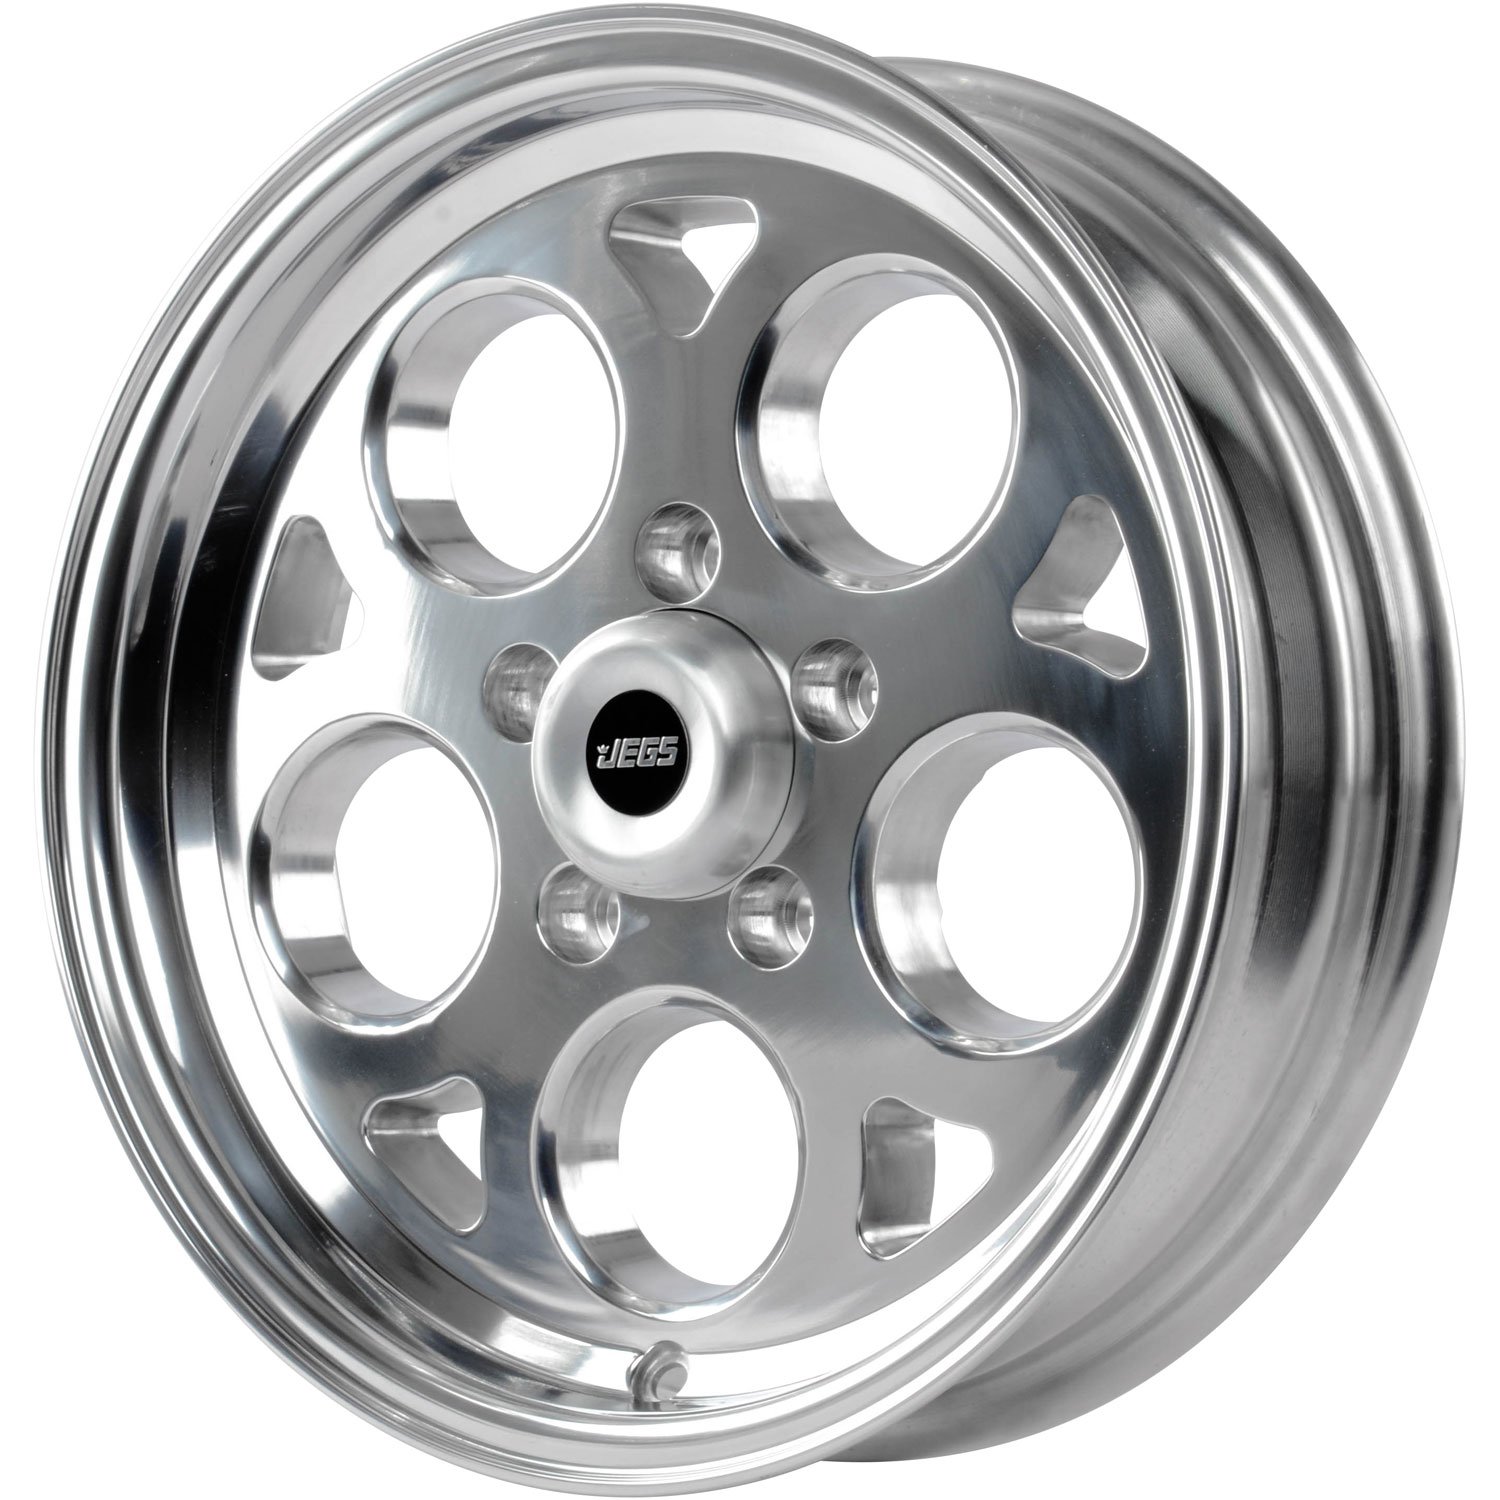 SSR Mag Wheel [Size: 15" x 4"] Polished